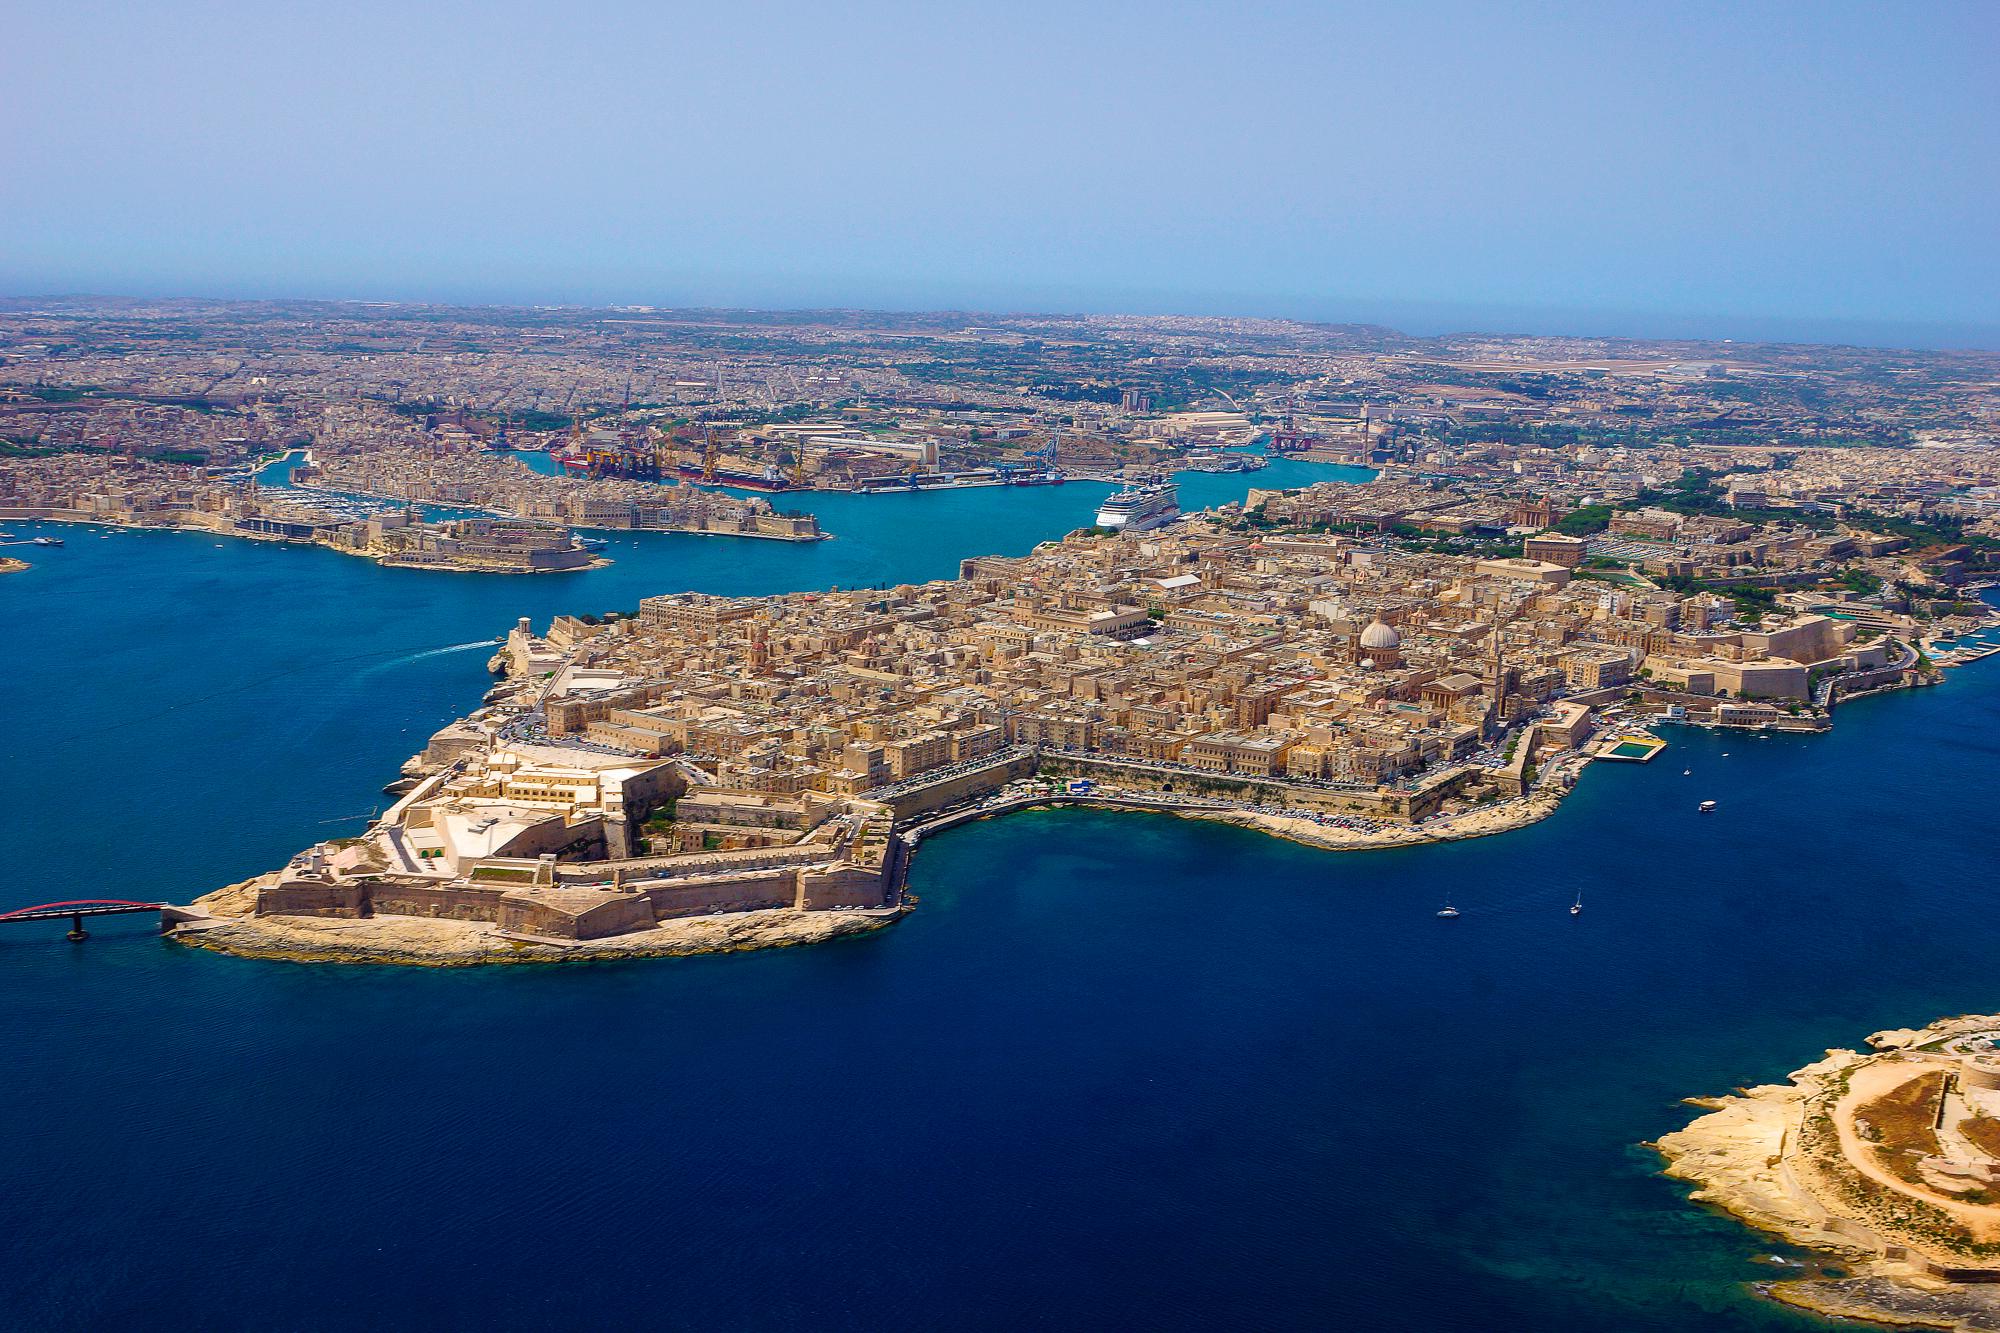 Vista aérea de La Valeta, capital de Malta.